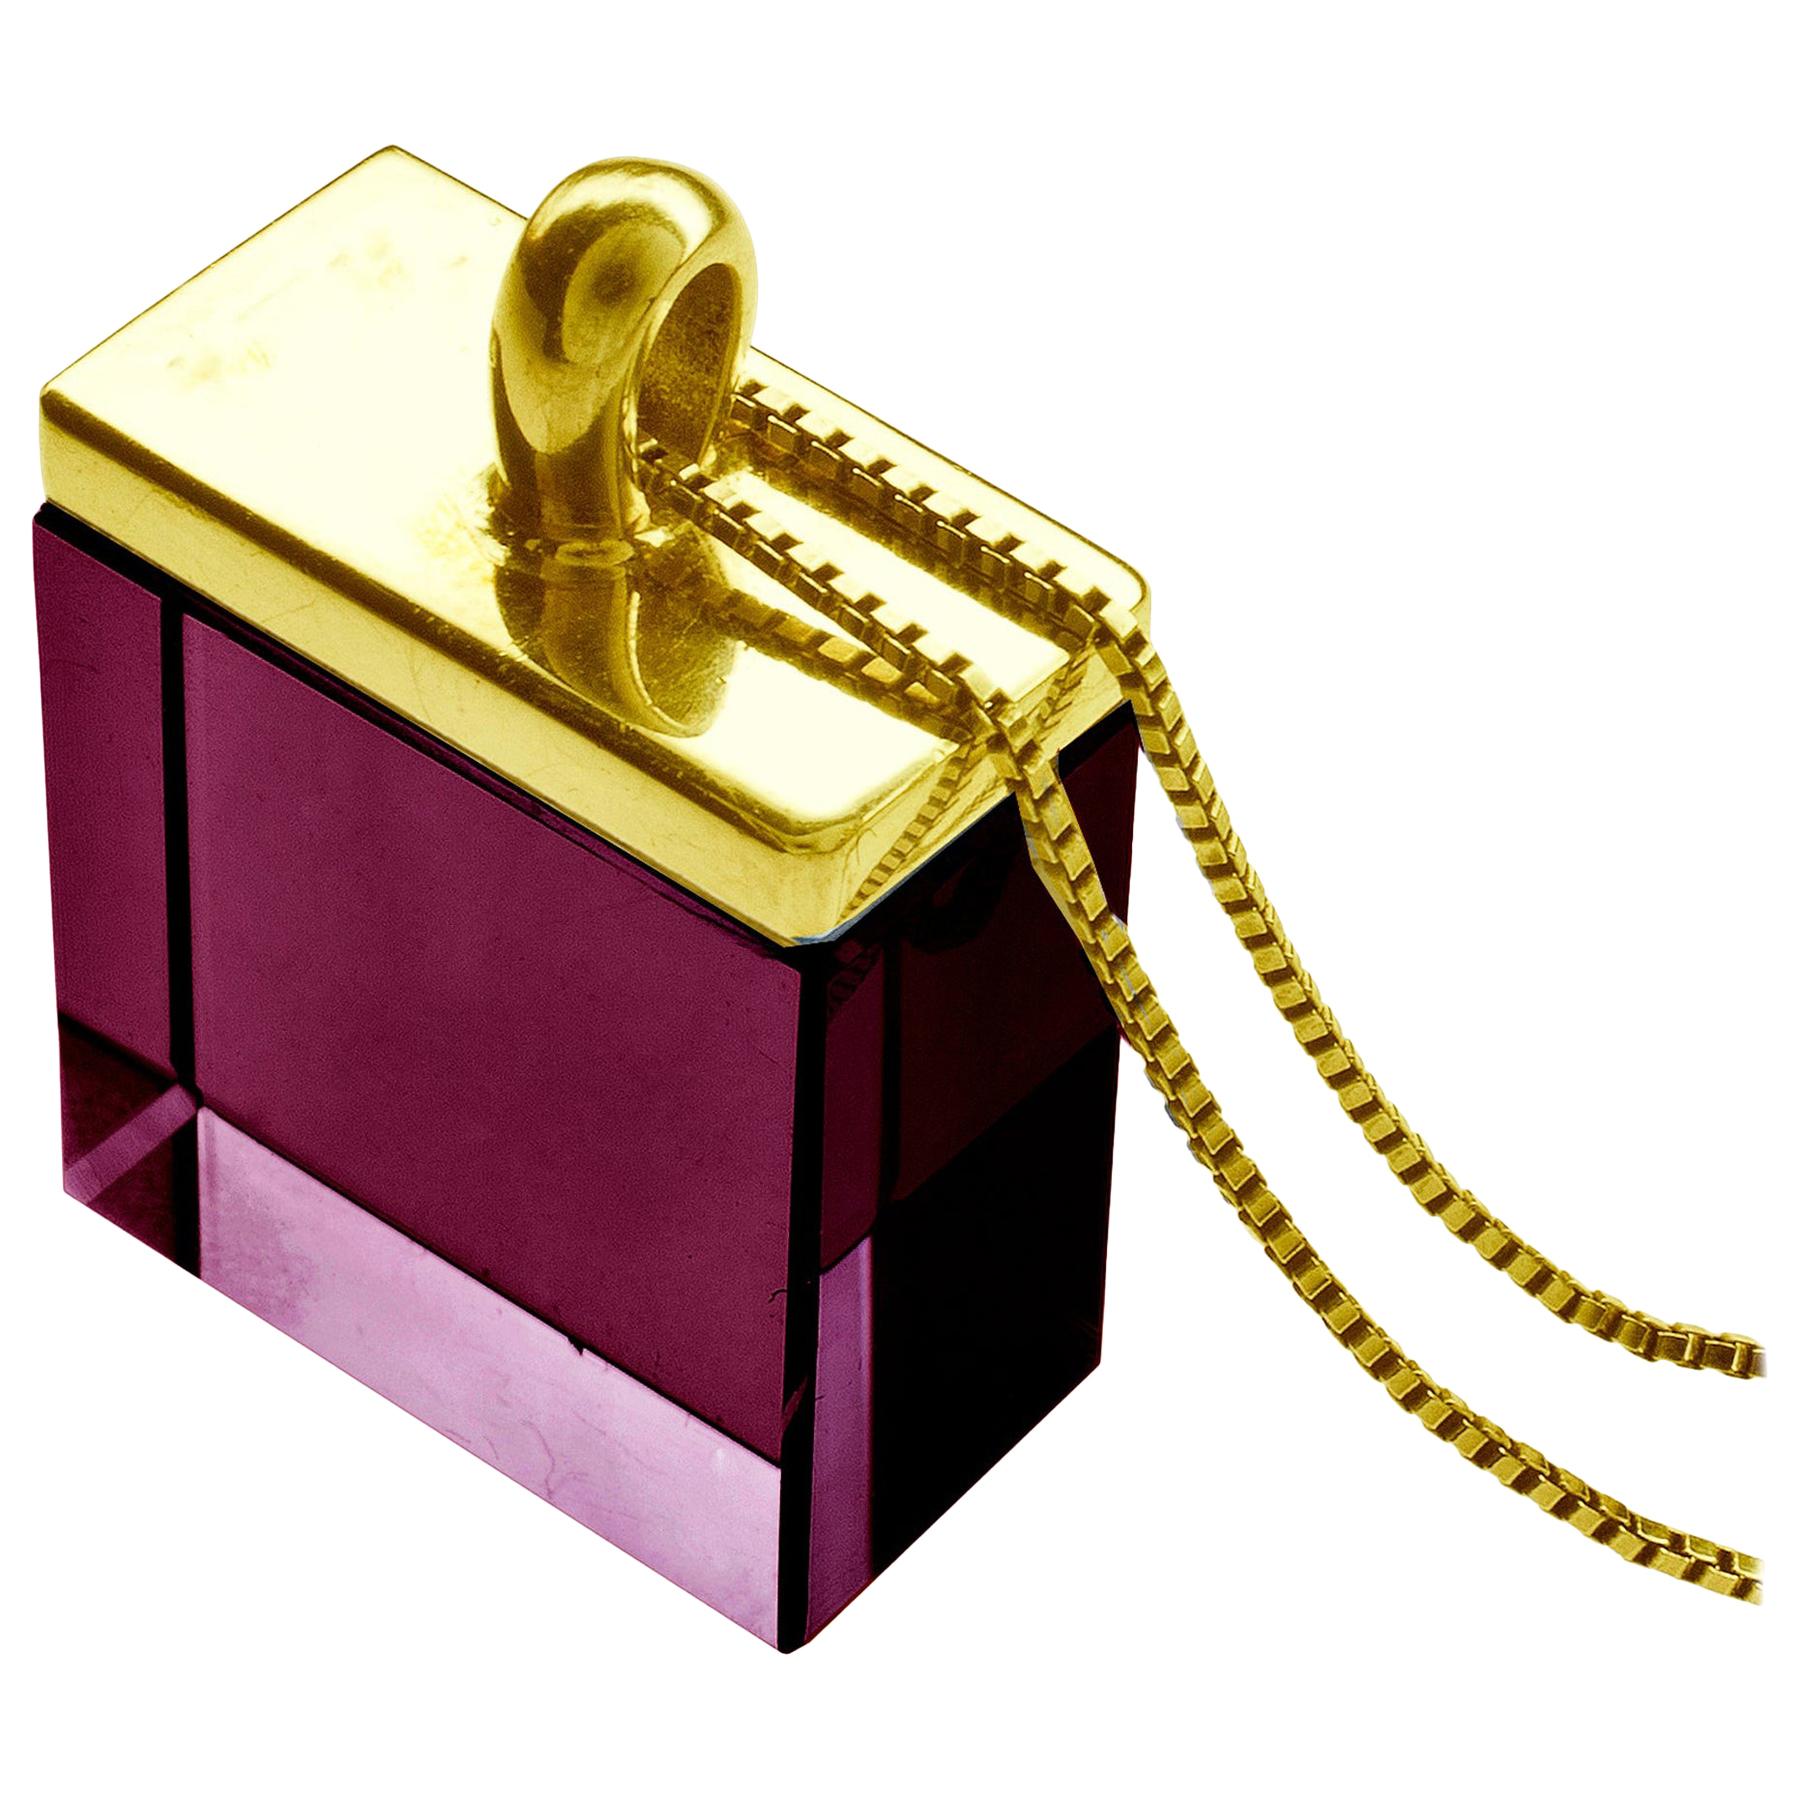 Eighteen Karat Yellow Gold Art Deco Style Pendant Necklace with Amethyst